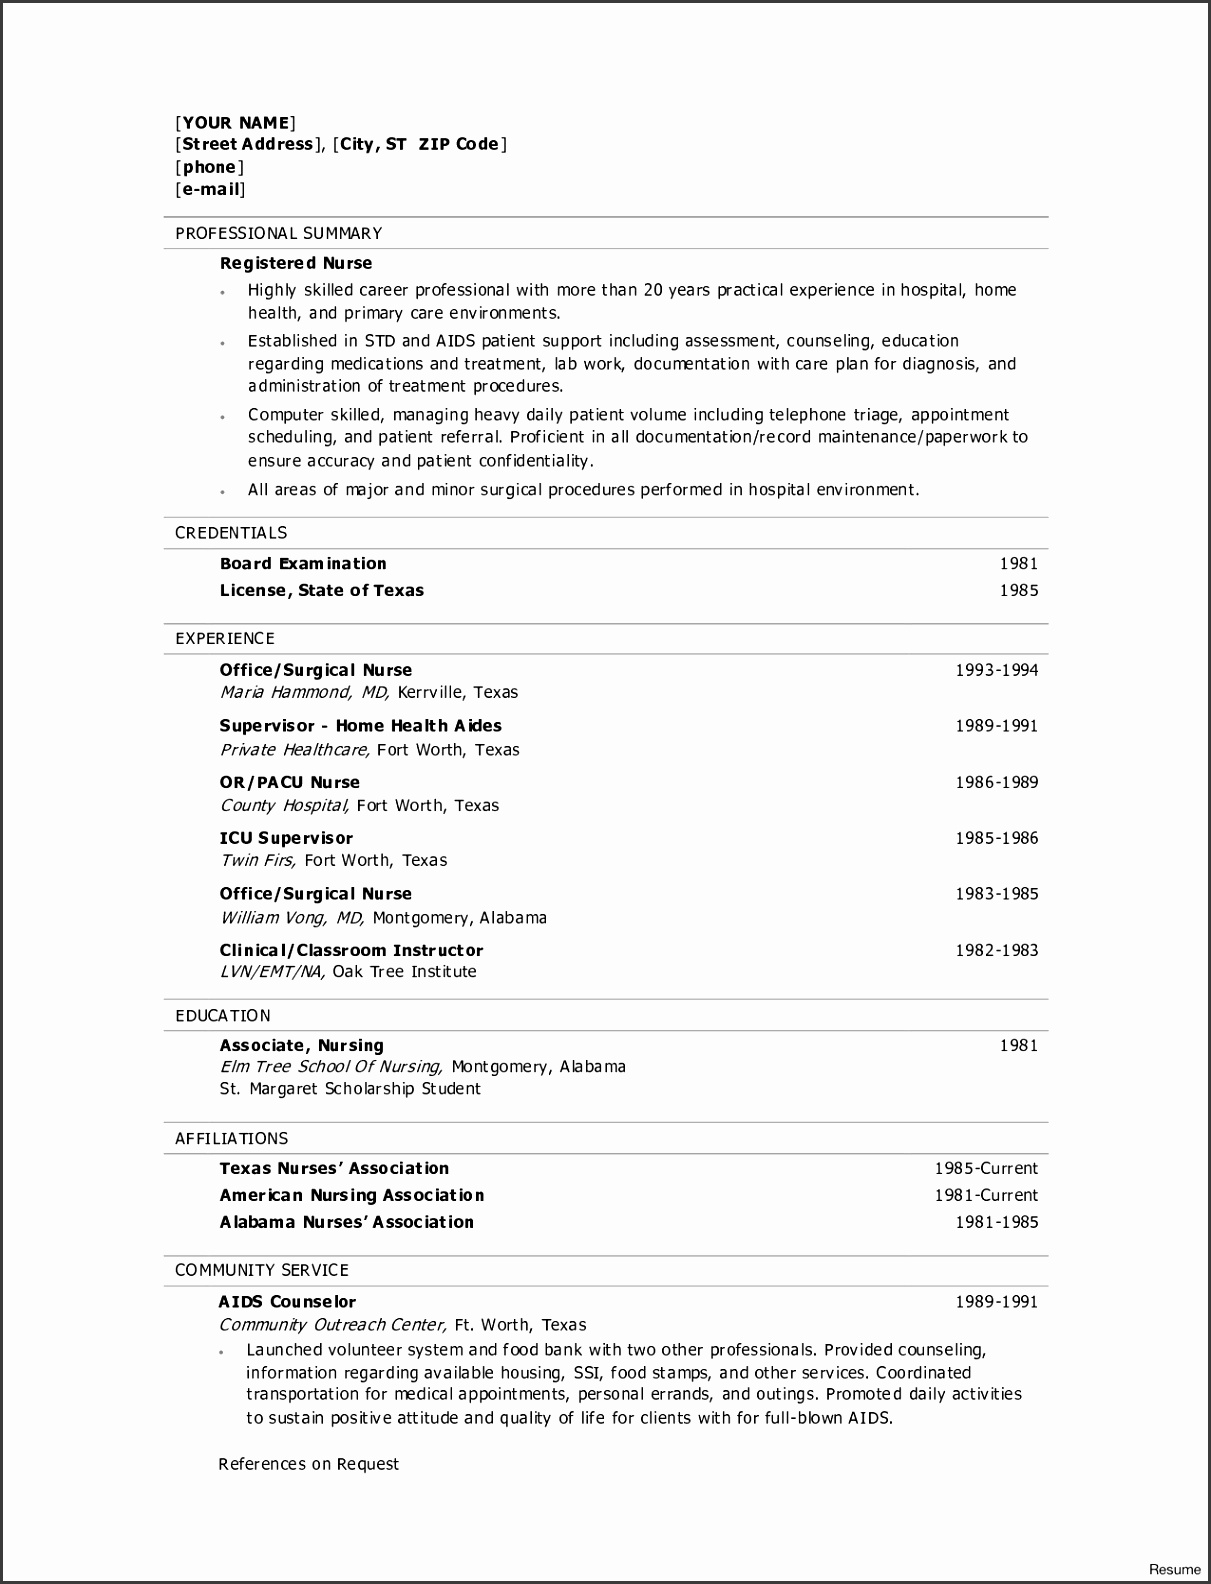 Registered Nurse Resume Template Free Sample Cover Letter Templates Nursing 30a